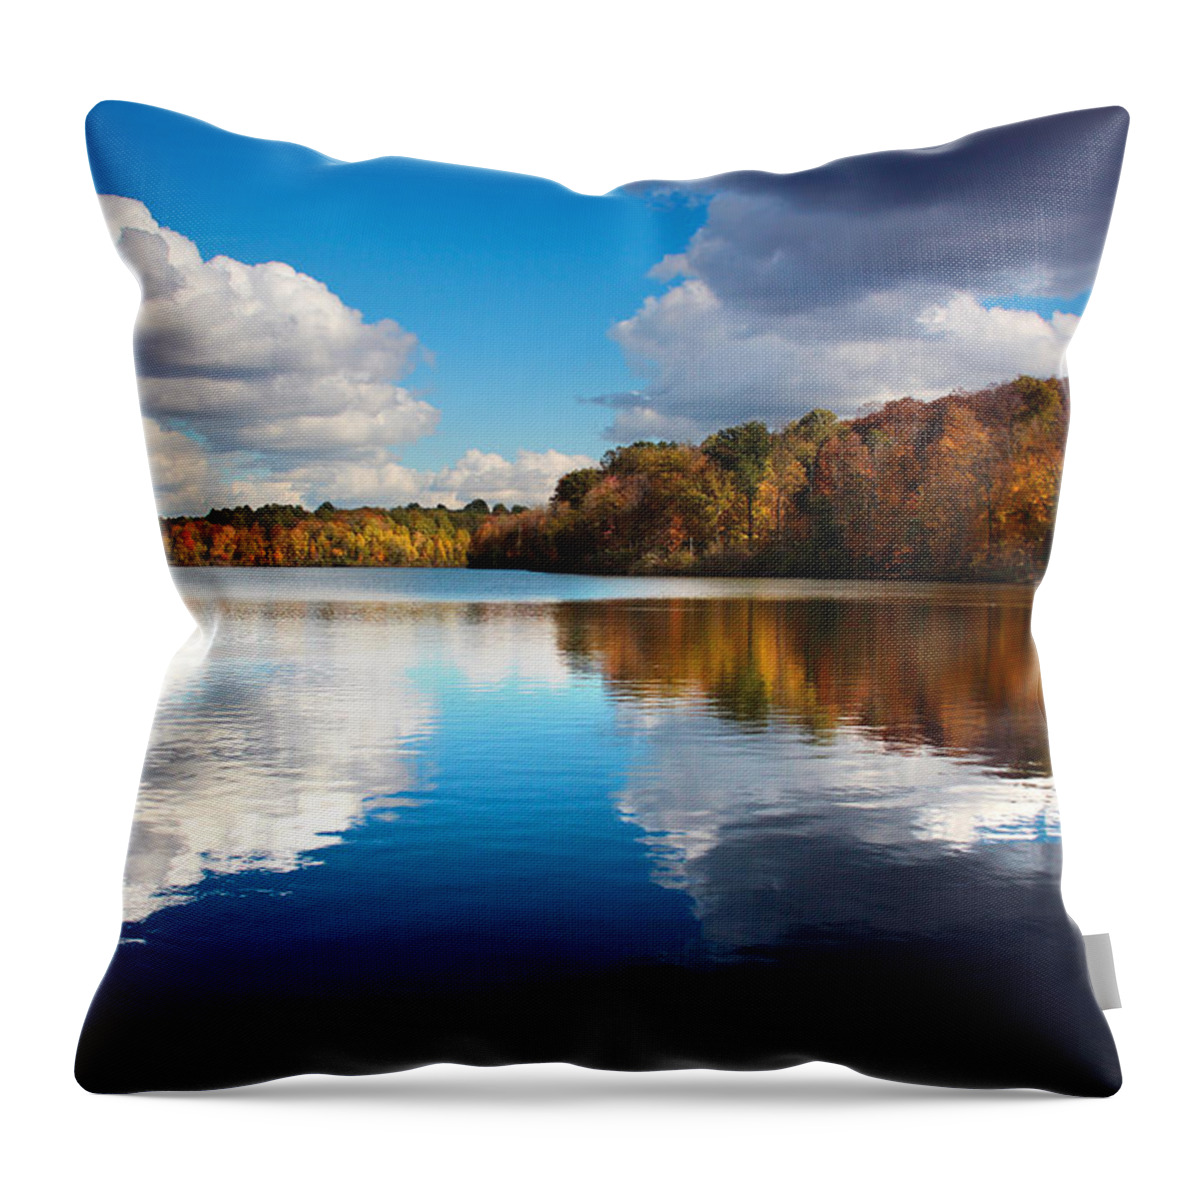  Throw Pillow featuring the photograph Crisp Autumn Blue by Rob Blair